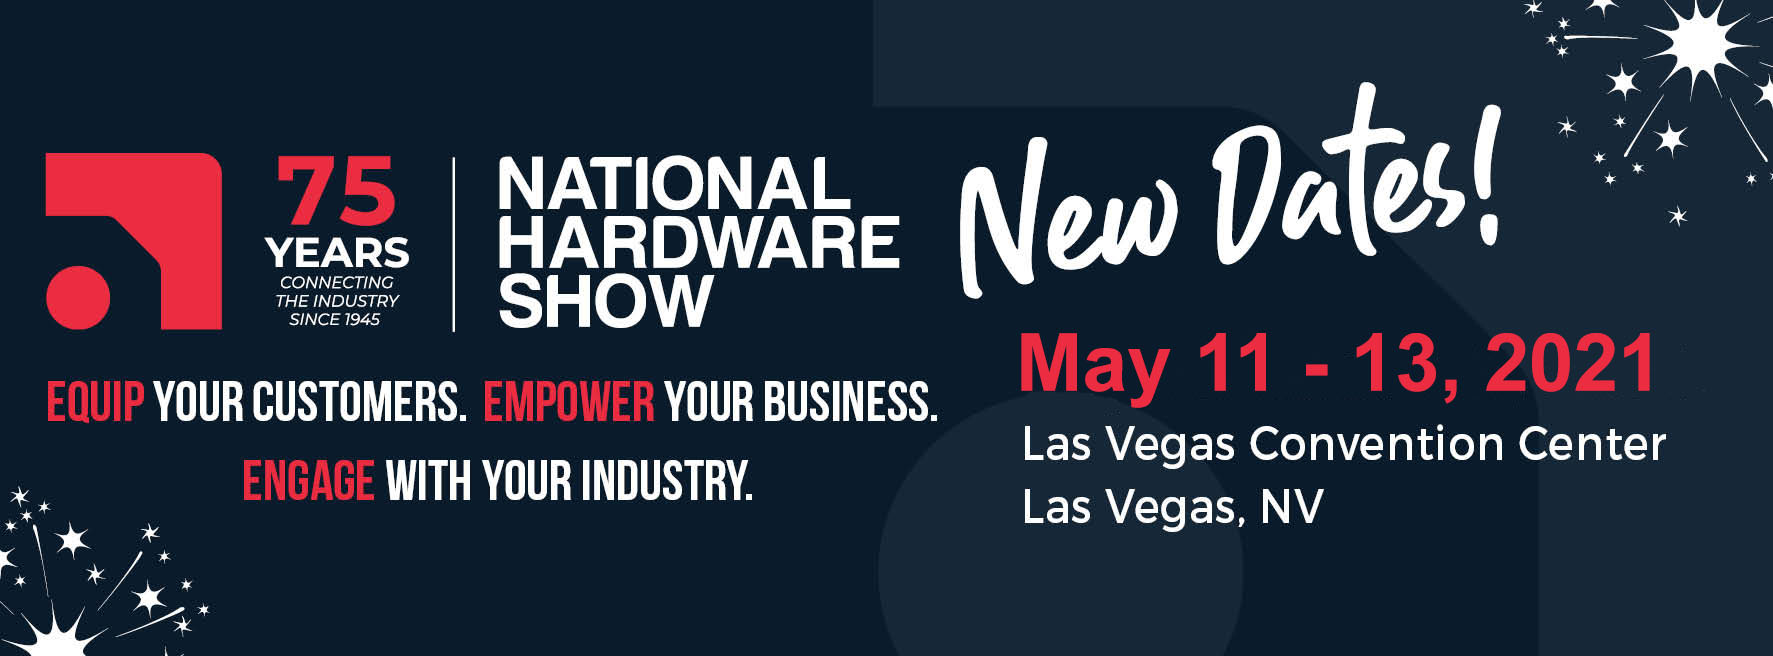 National Hardware Show New Dates Las Vegas